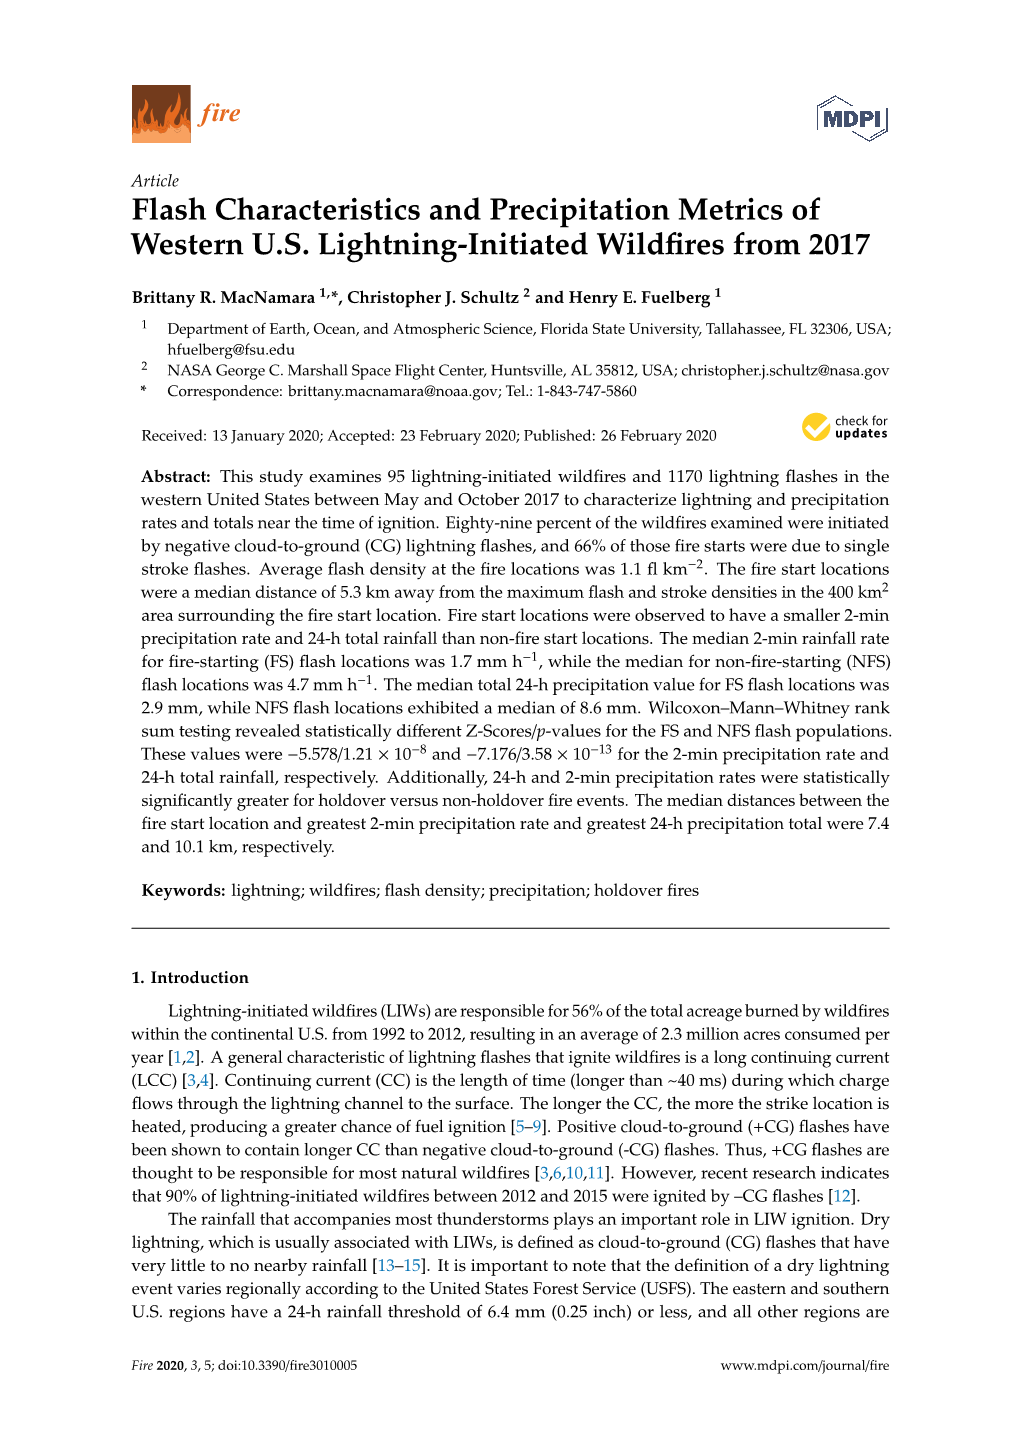 Flash Characteristics and Precipitation Metrics of Western U.S. Lightning-Initiated Wildﬁres from 2017